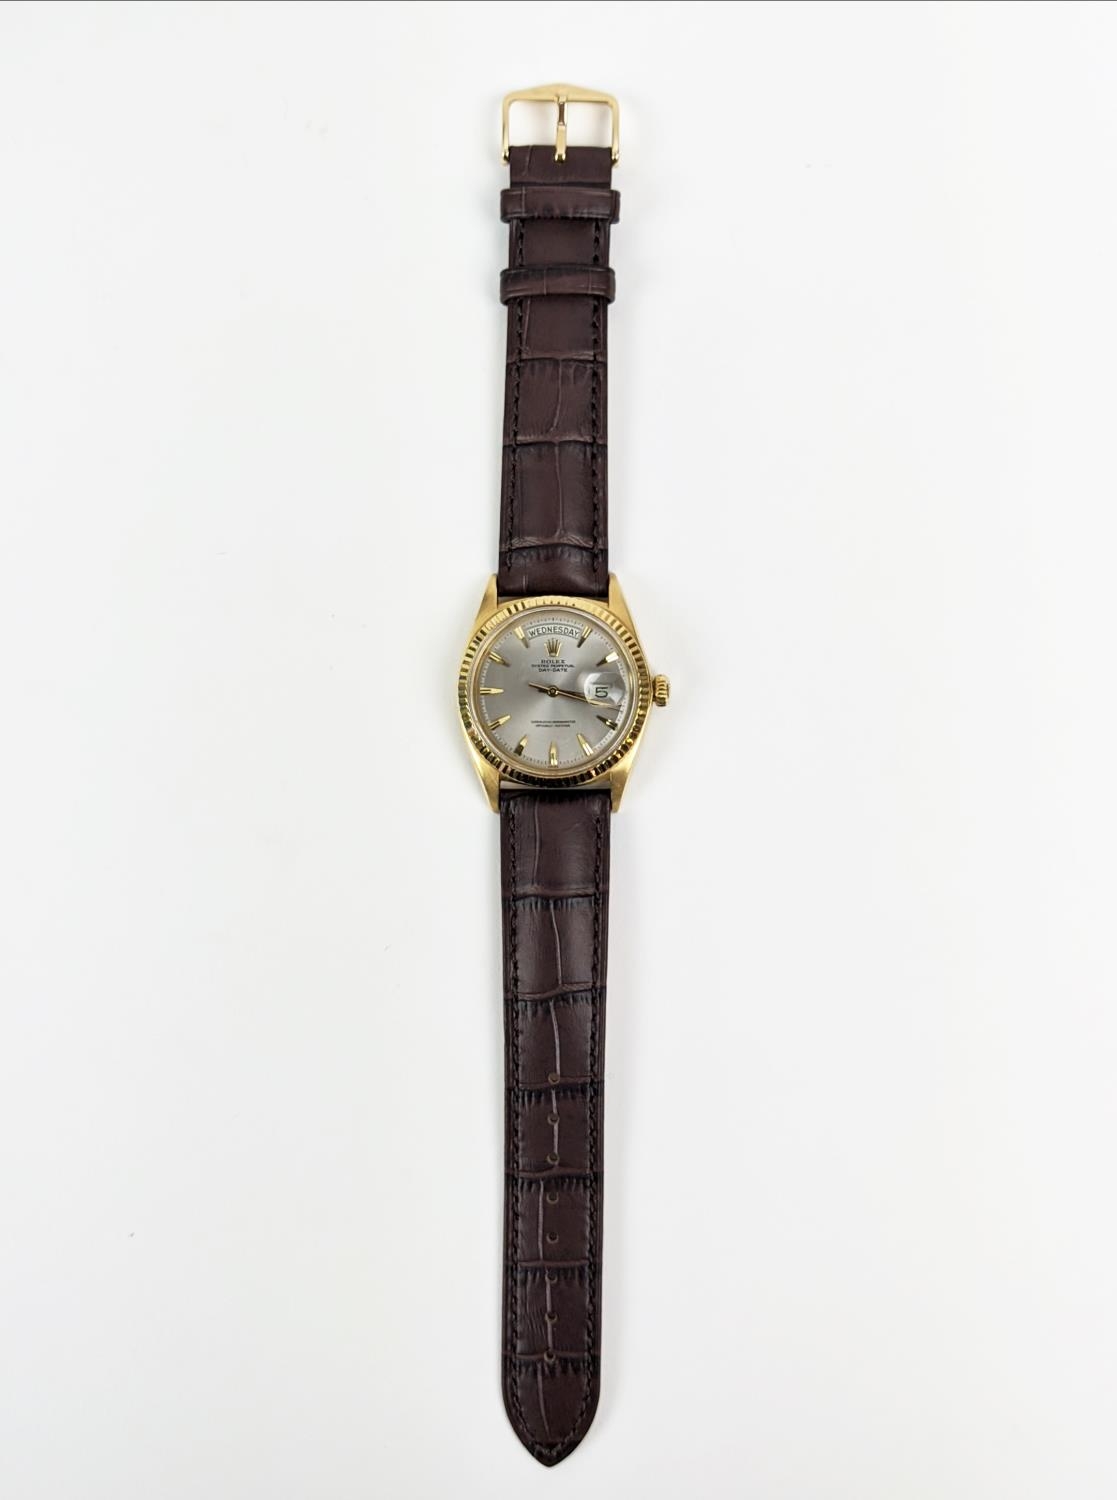 ROLEX OYSTER PERPETUAL DAY DATE WRISTWATCH, circa 1960, 18ct gold case, 36mm diameter, model